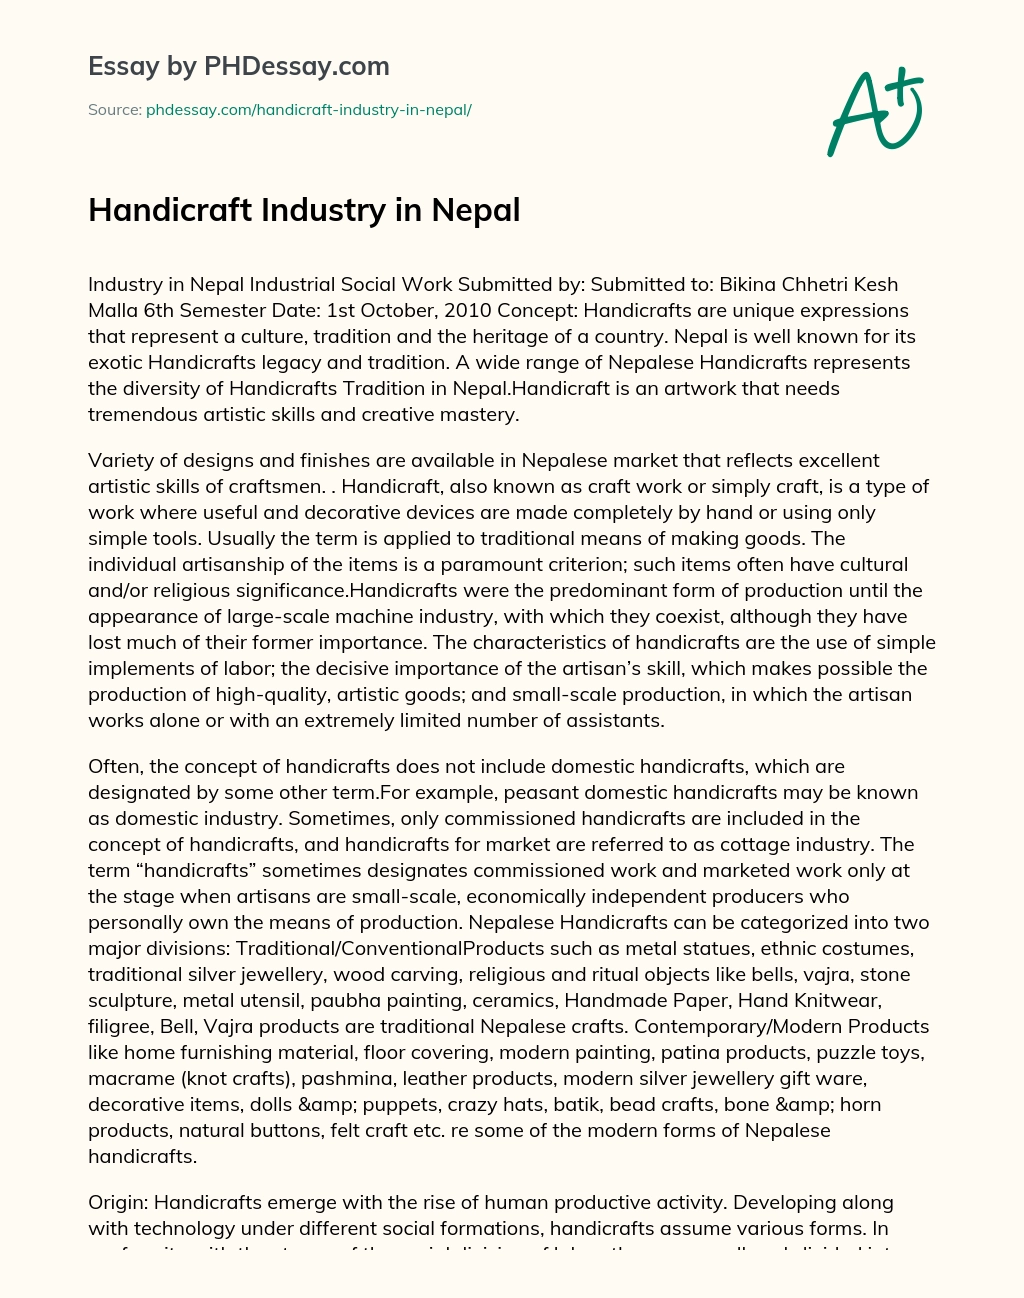 Handicraft Industry in Nepal essay